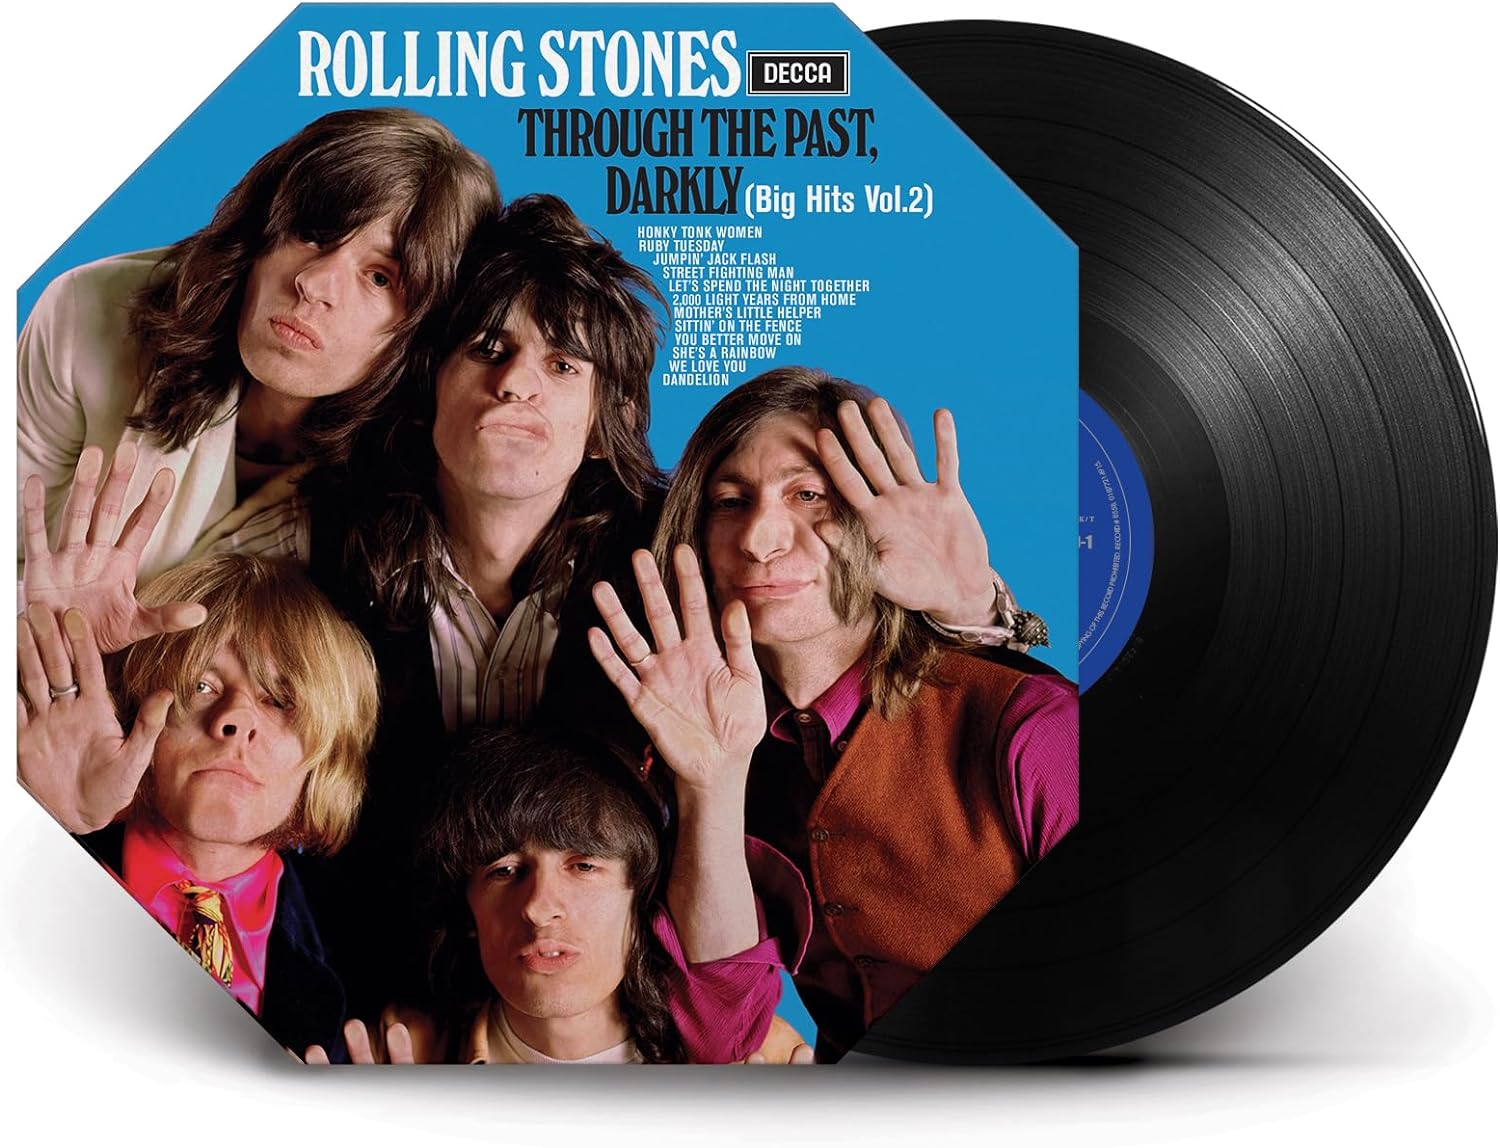 THE ROLLING STONES - Through The Past Darkly (Big Hits Vol. 2) [U.S. Version Reissue] - 2LP - Vinyl [JUL 12]